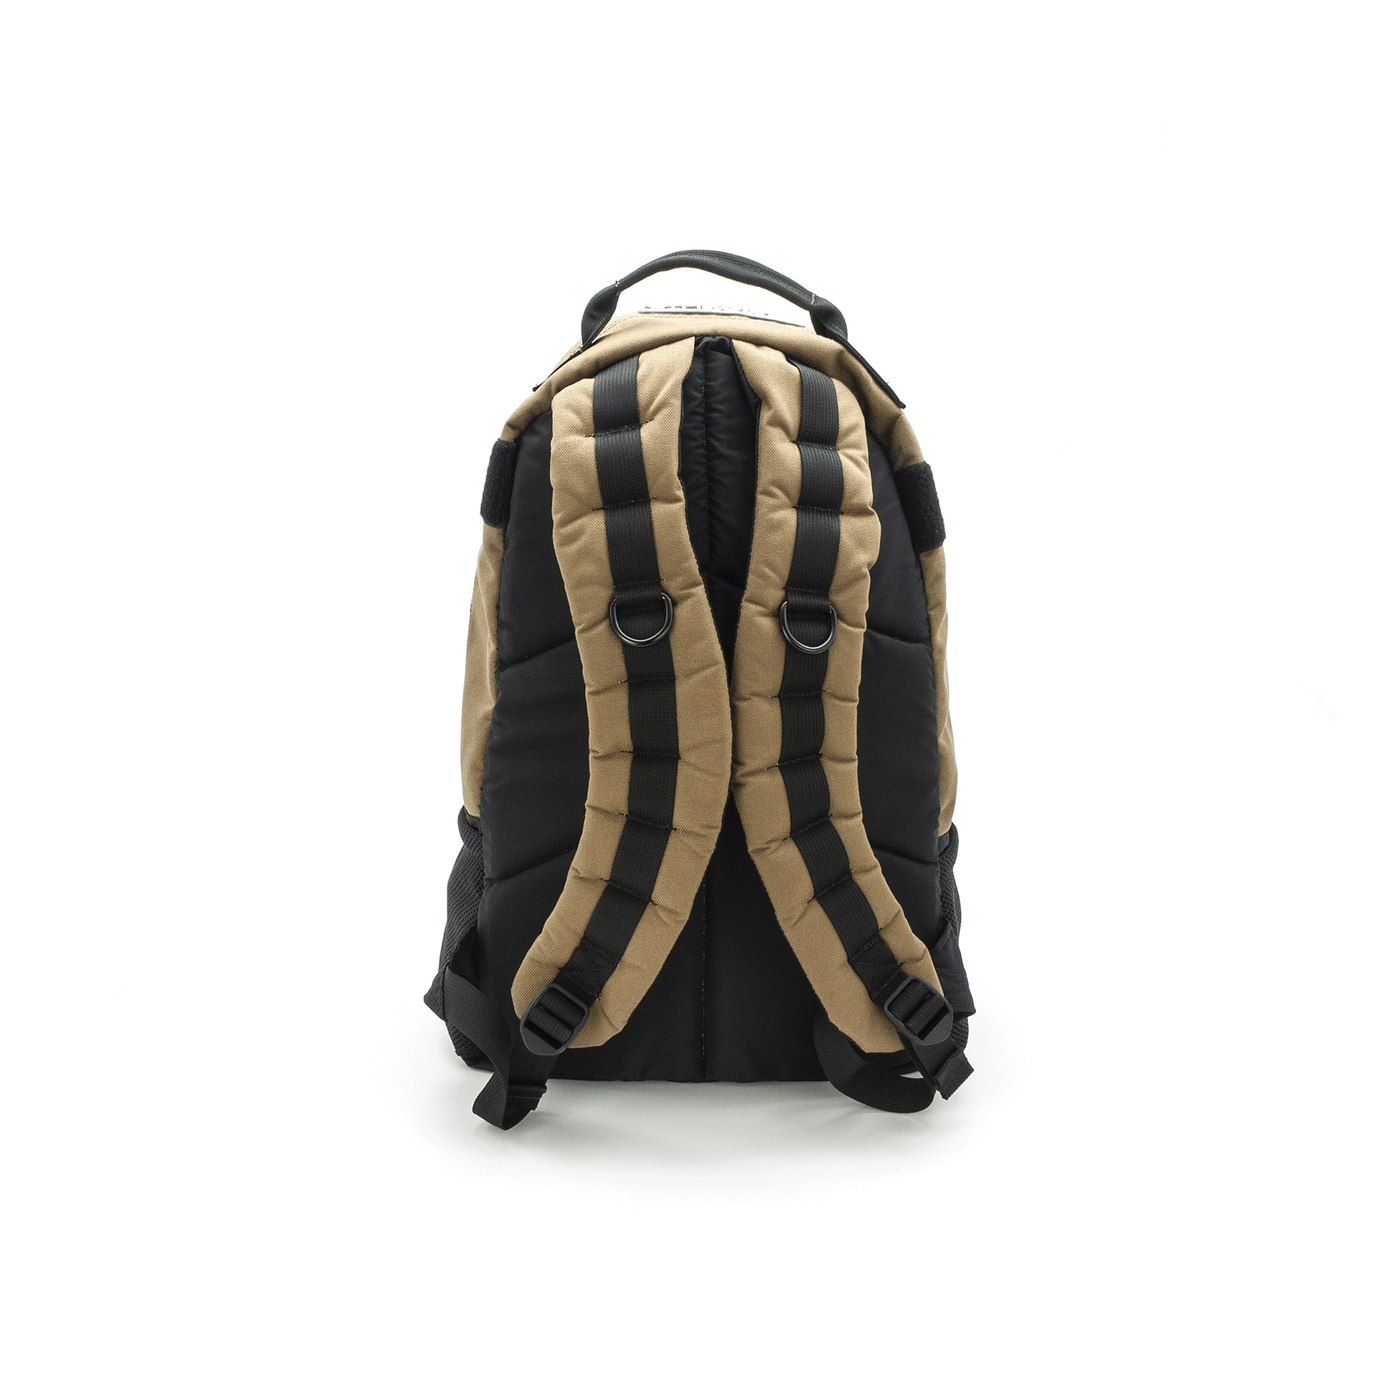 Maglite Black Backpack